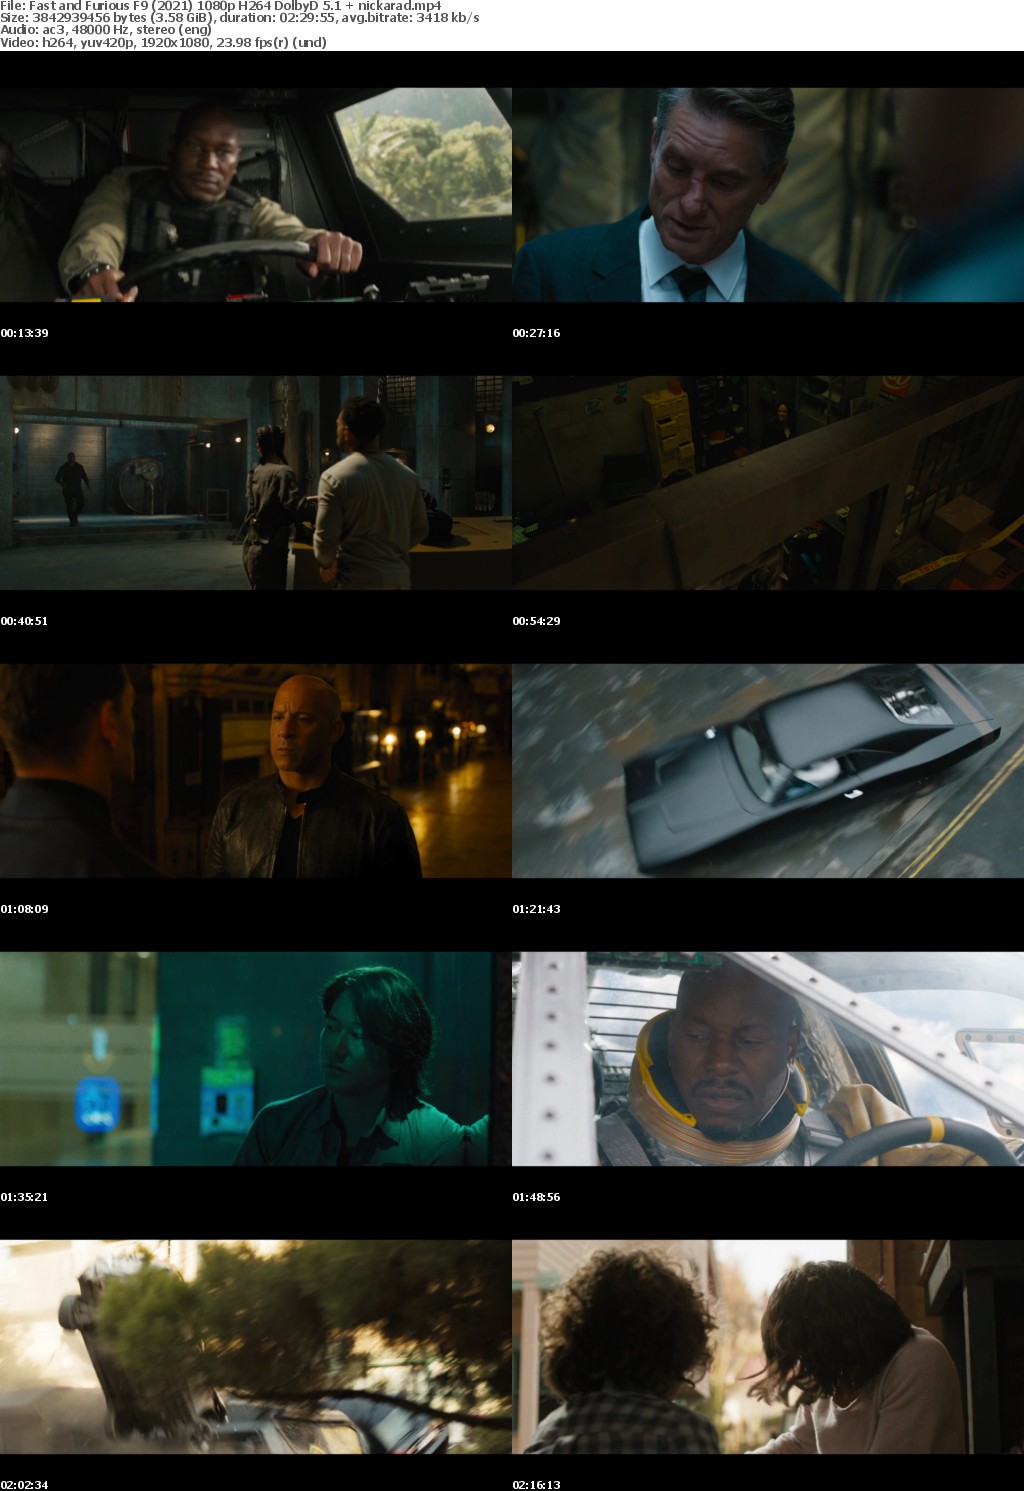 Fast and Furious F9 (2021) 1080p BluRay H264 DolbyD 5 1 nickarad